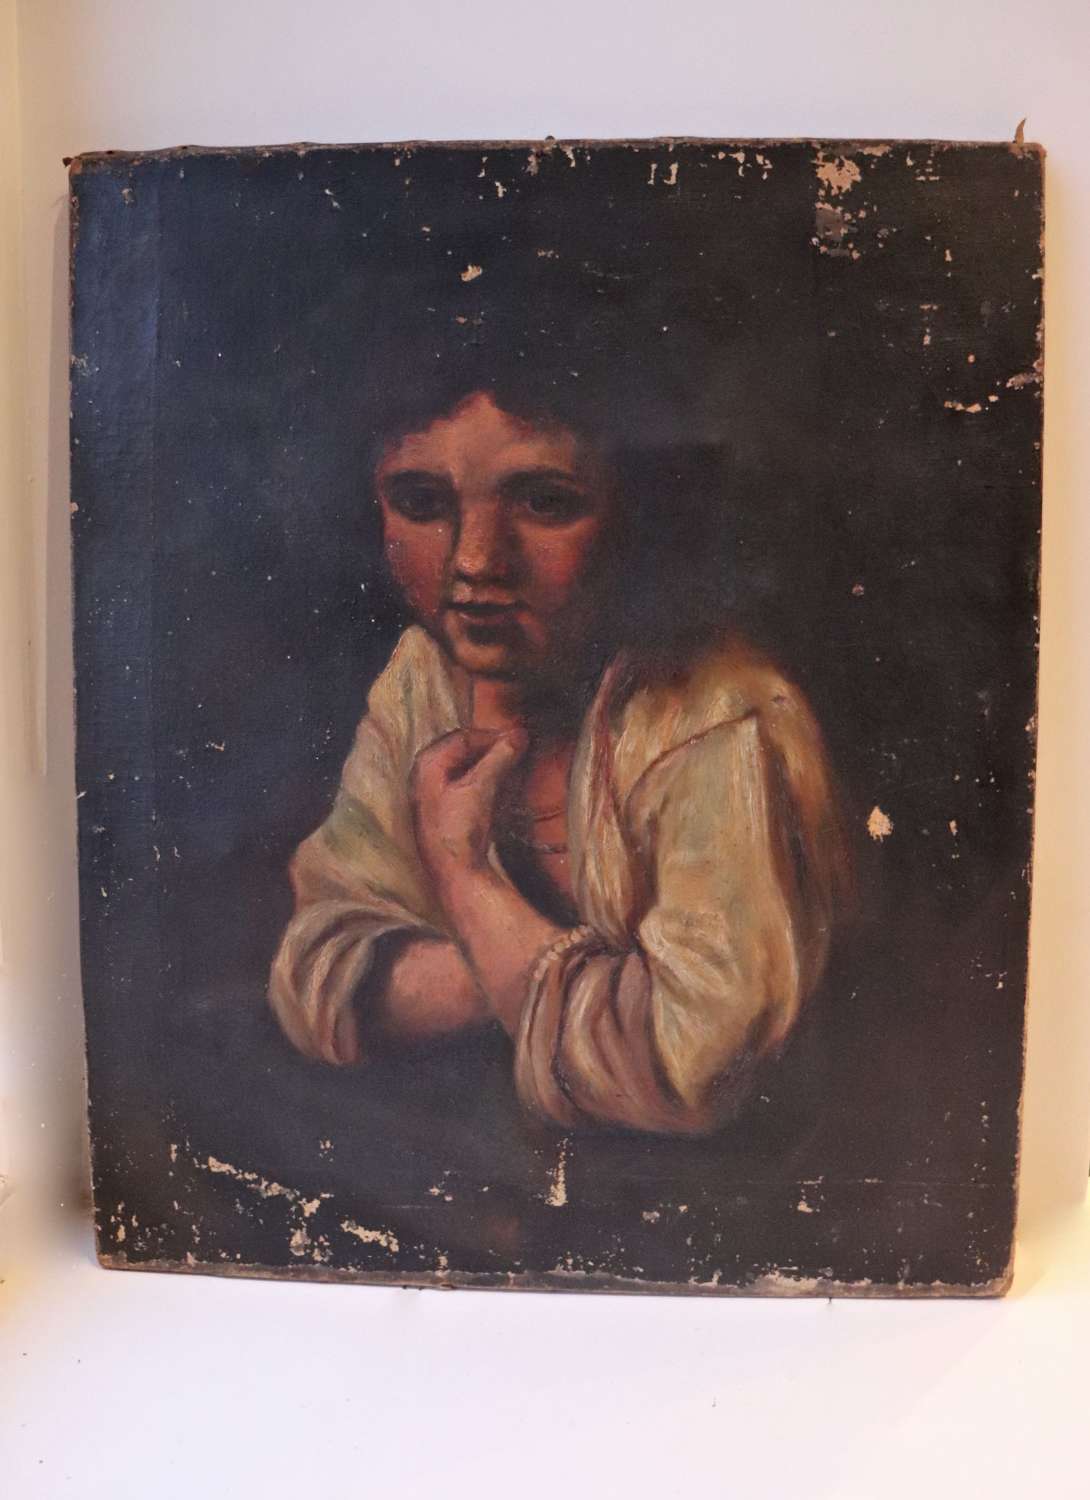 Late 19th century portrait of a boy